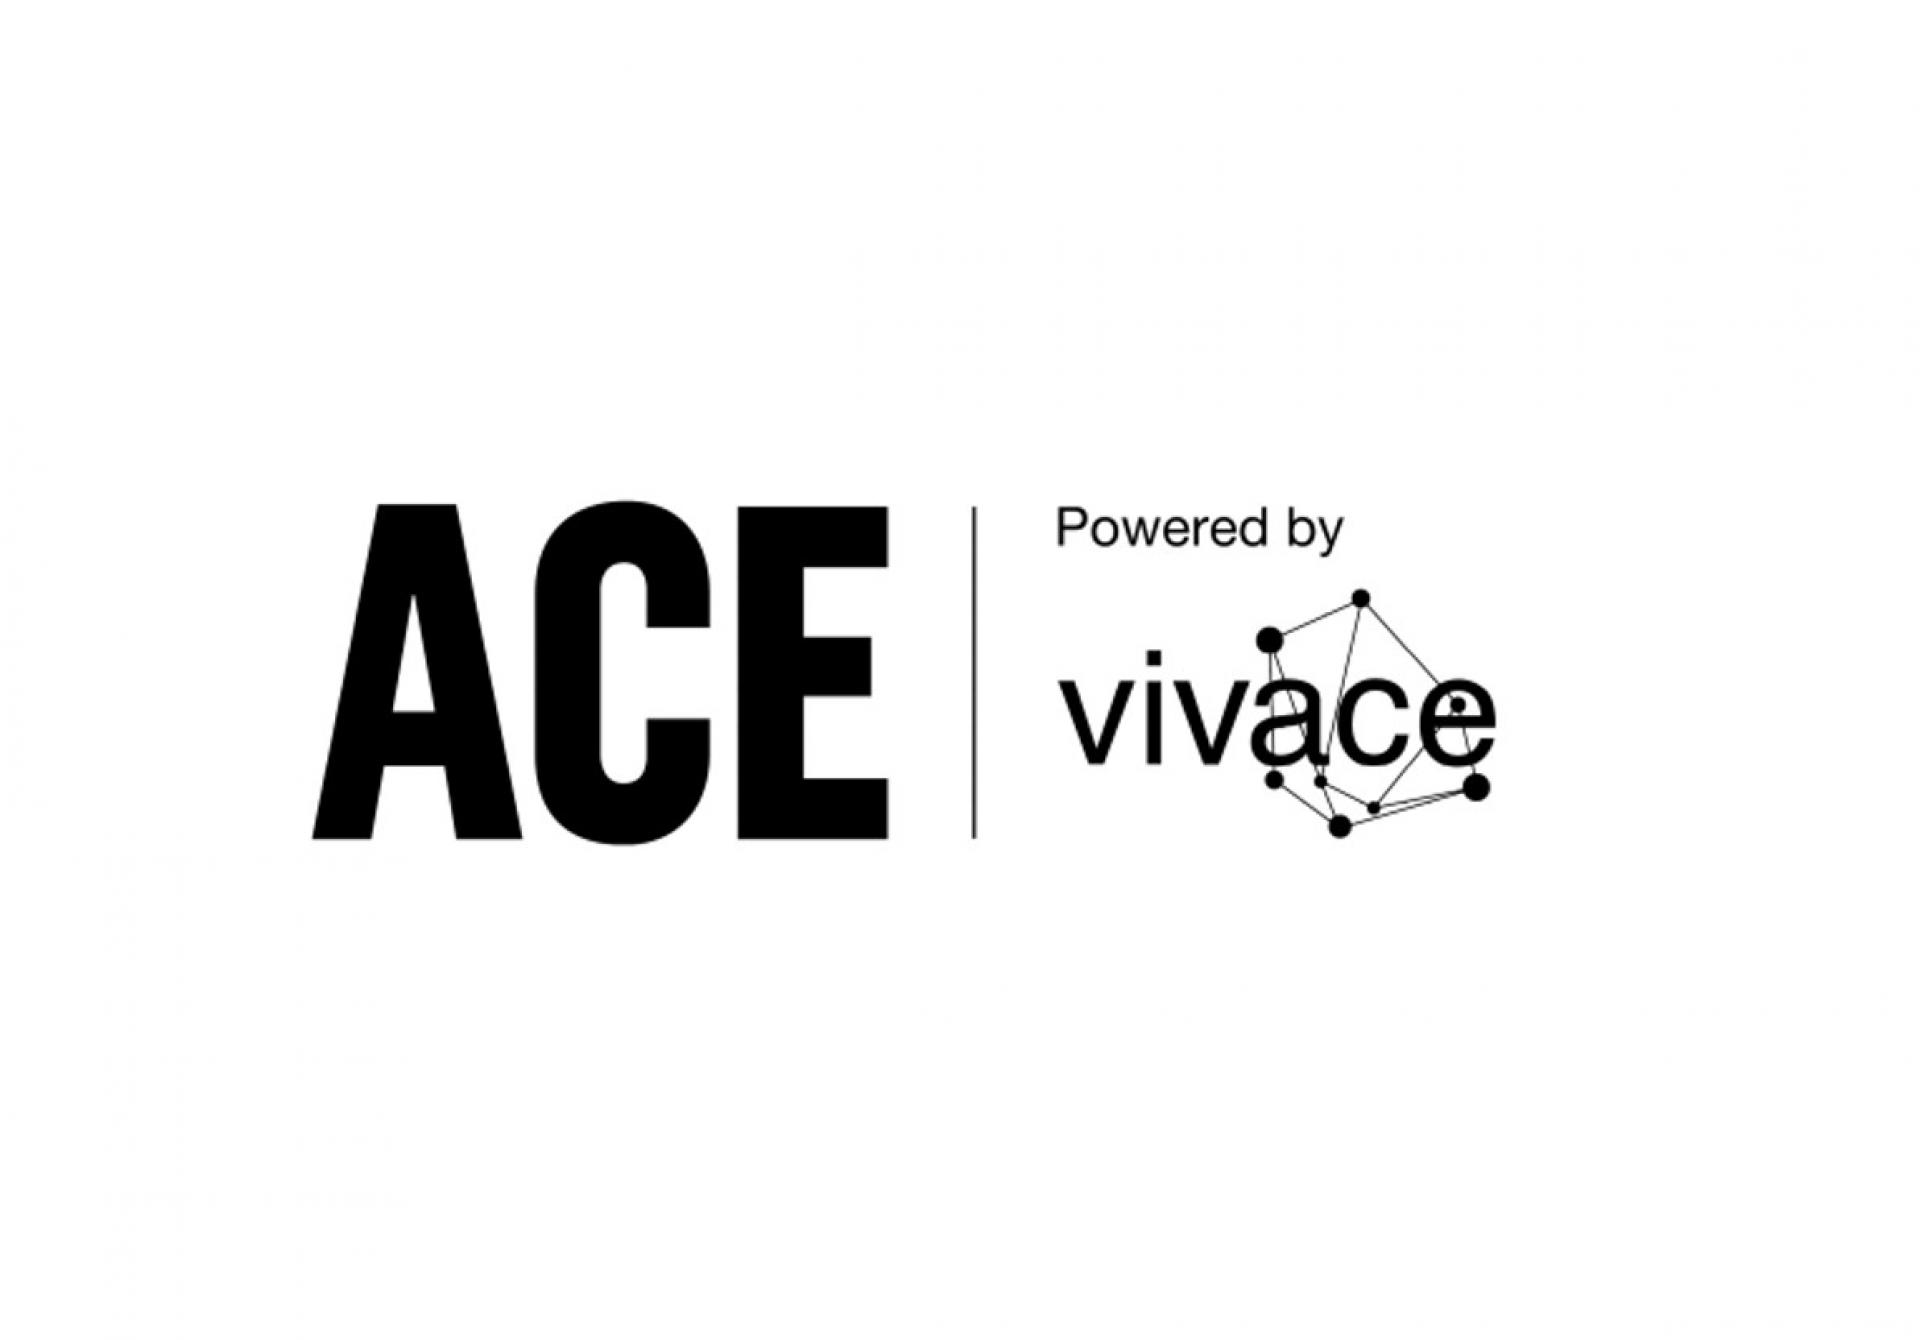 ACE Vivace